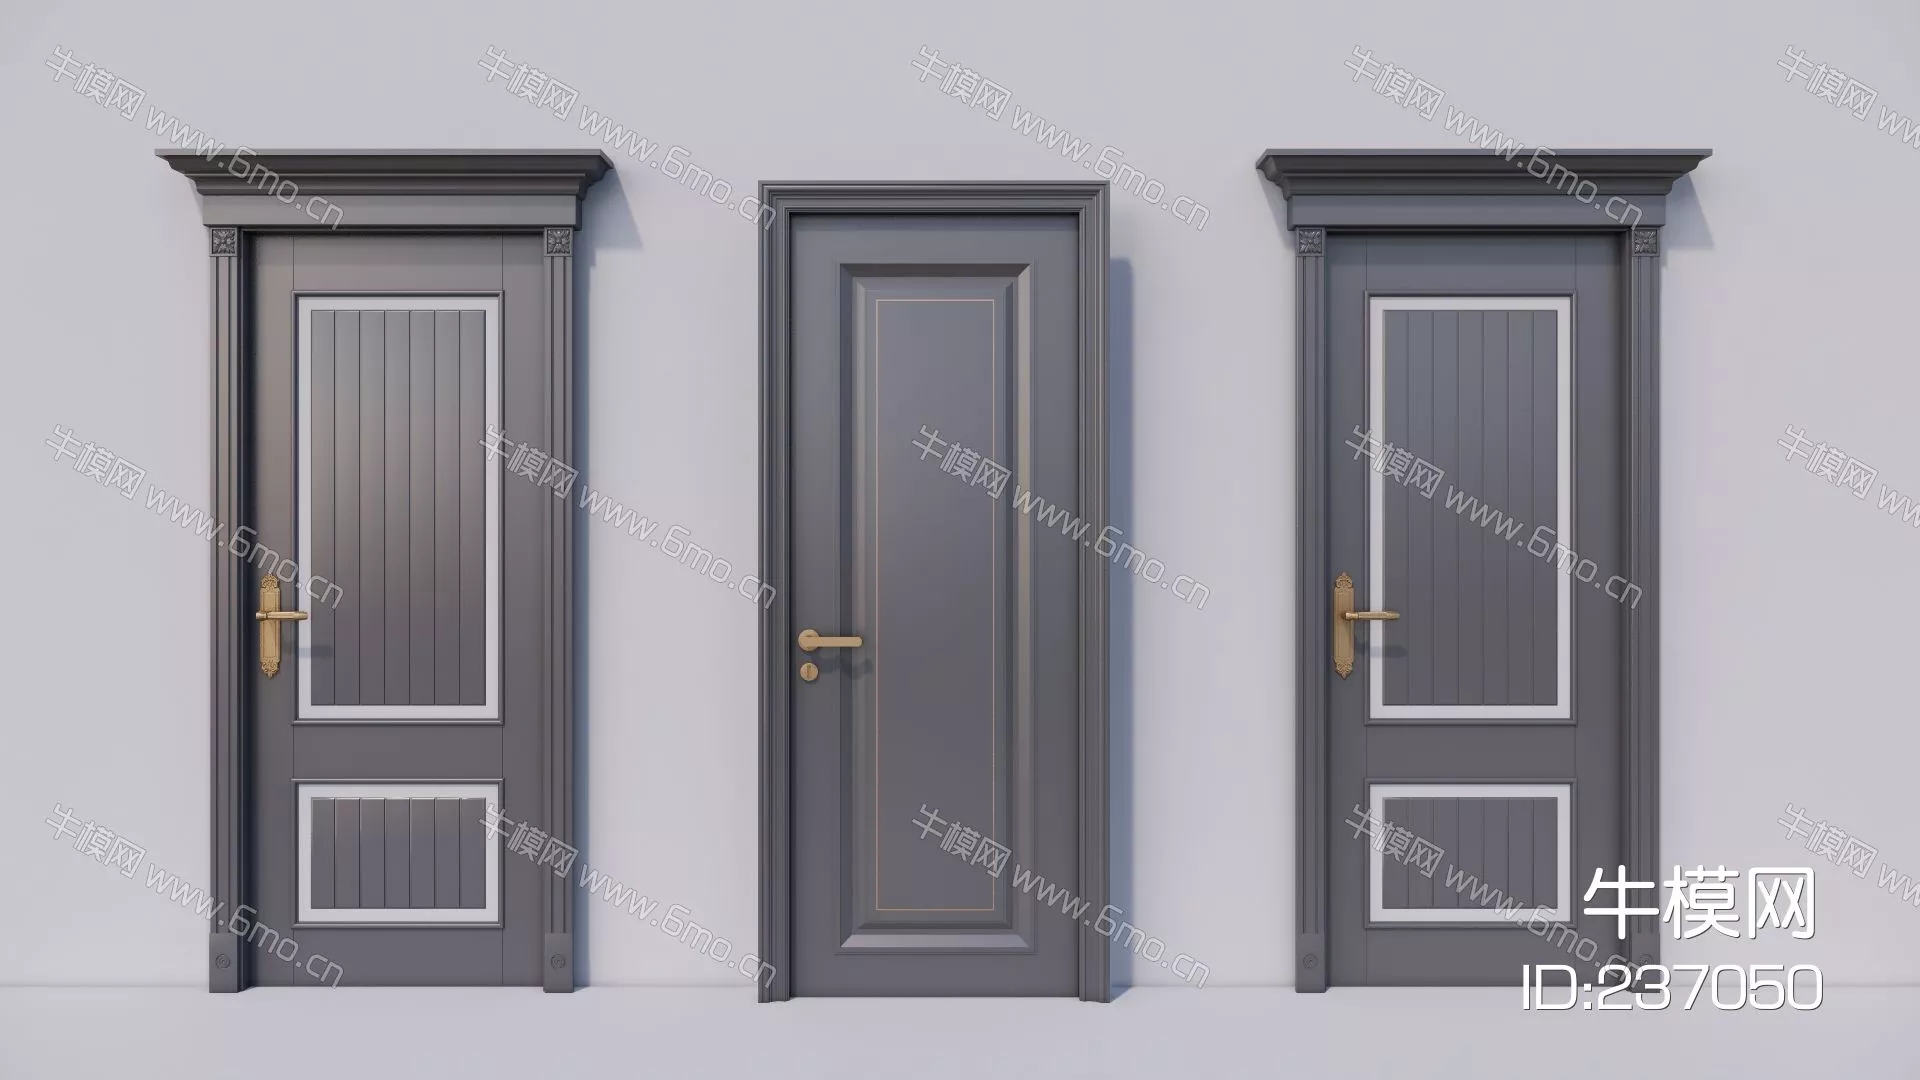 MODERN DOOR AND WINDOWS - SKETCHUP 3D MODEL - ENSCAPE - 237050